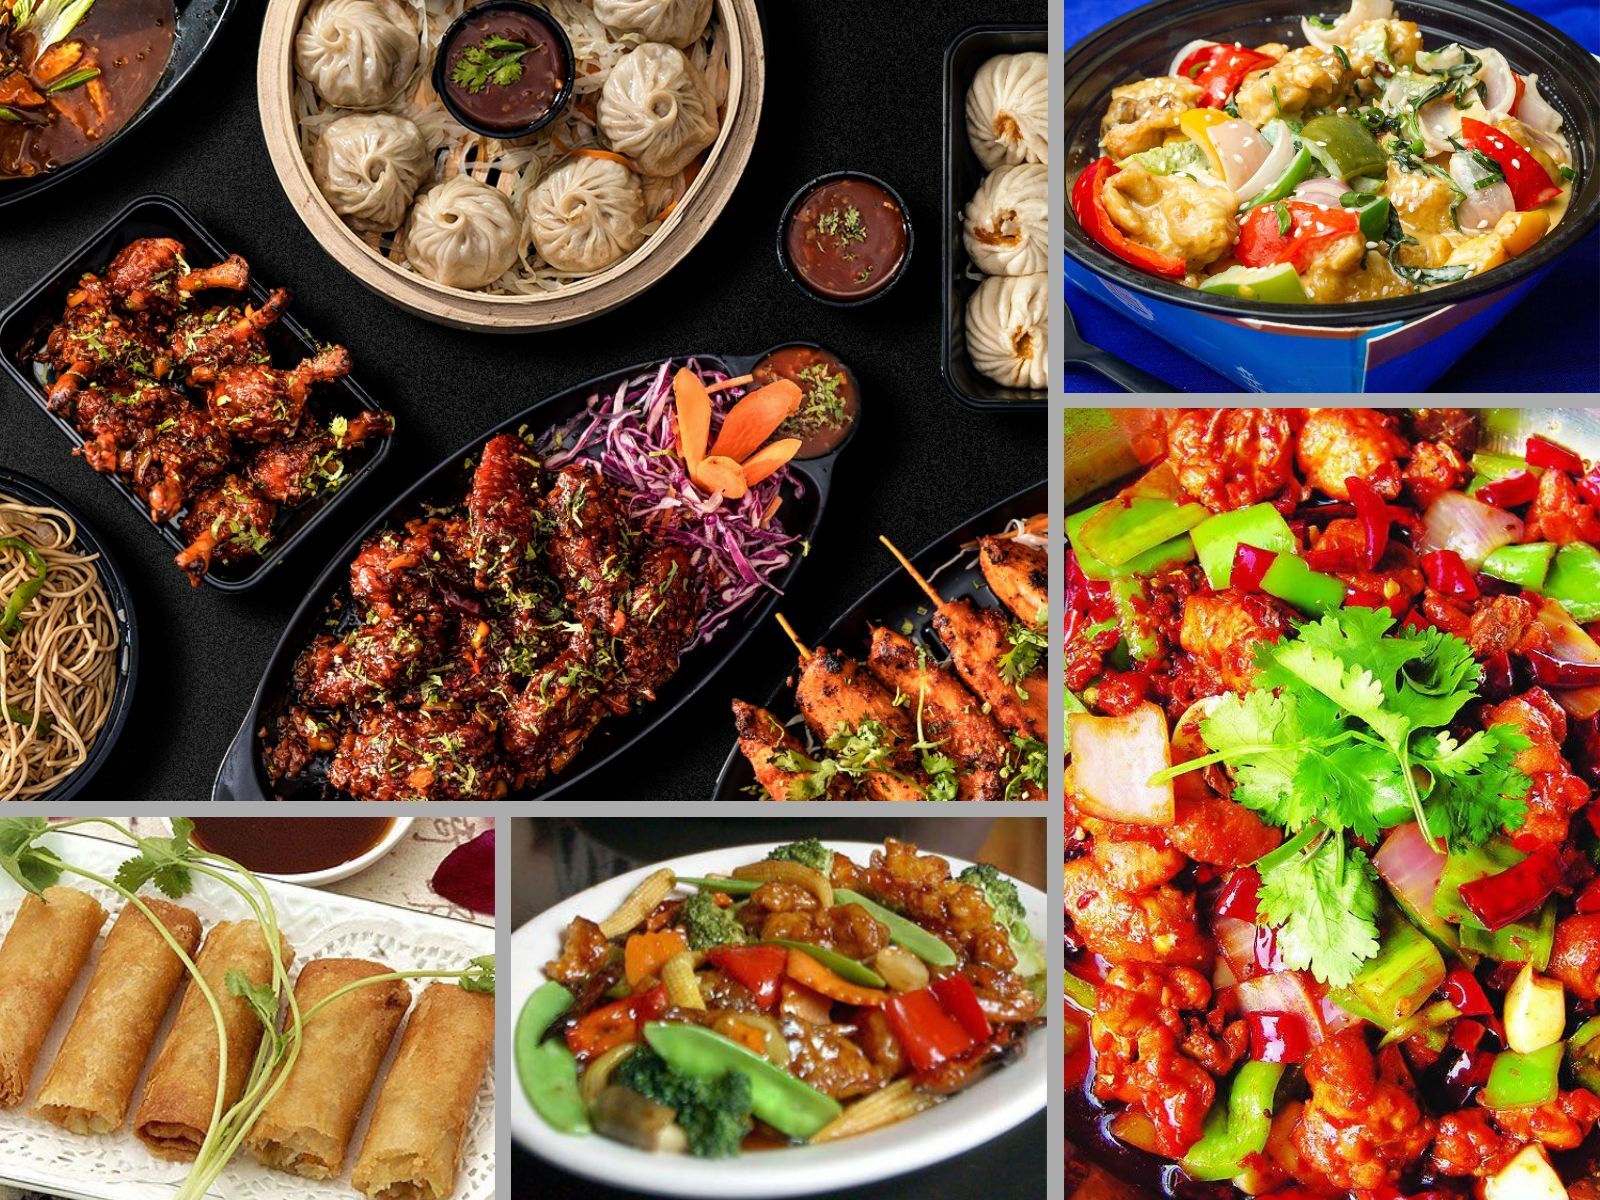 11 Best Restaurants in Mohali You Must Visit - Mohali.org.in